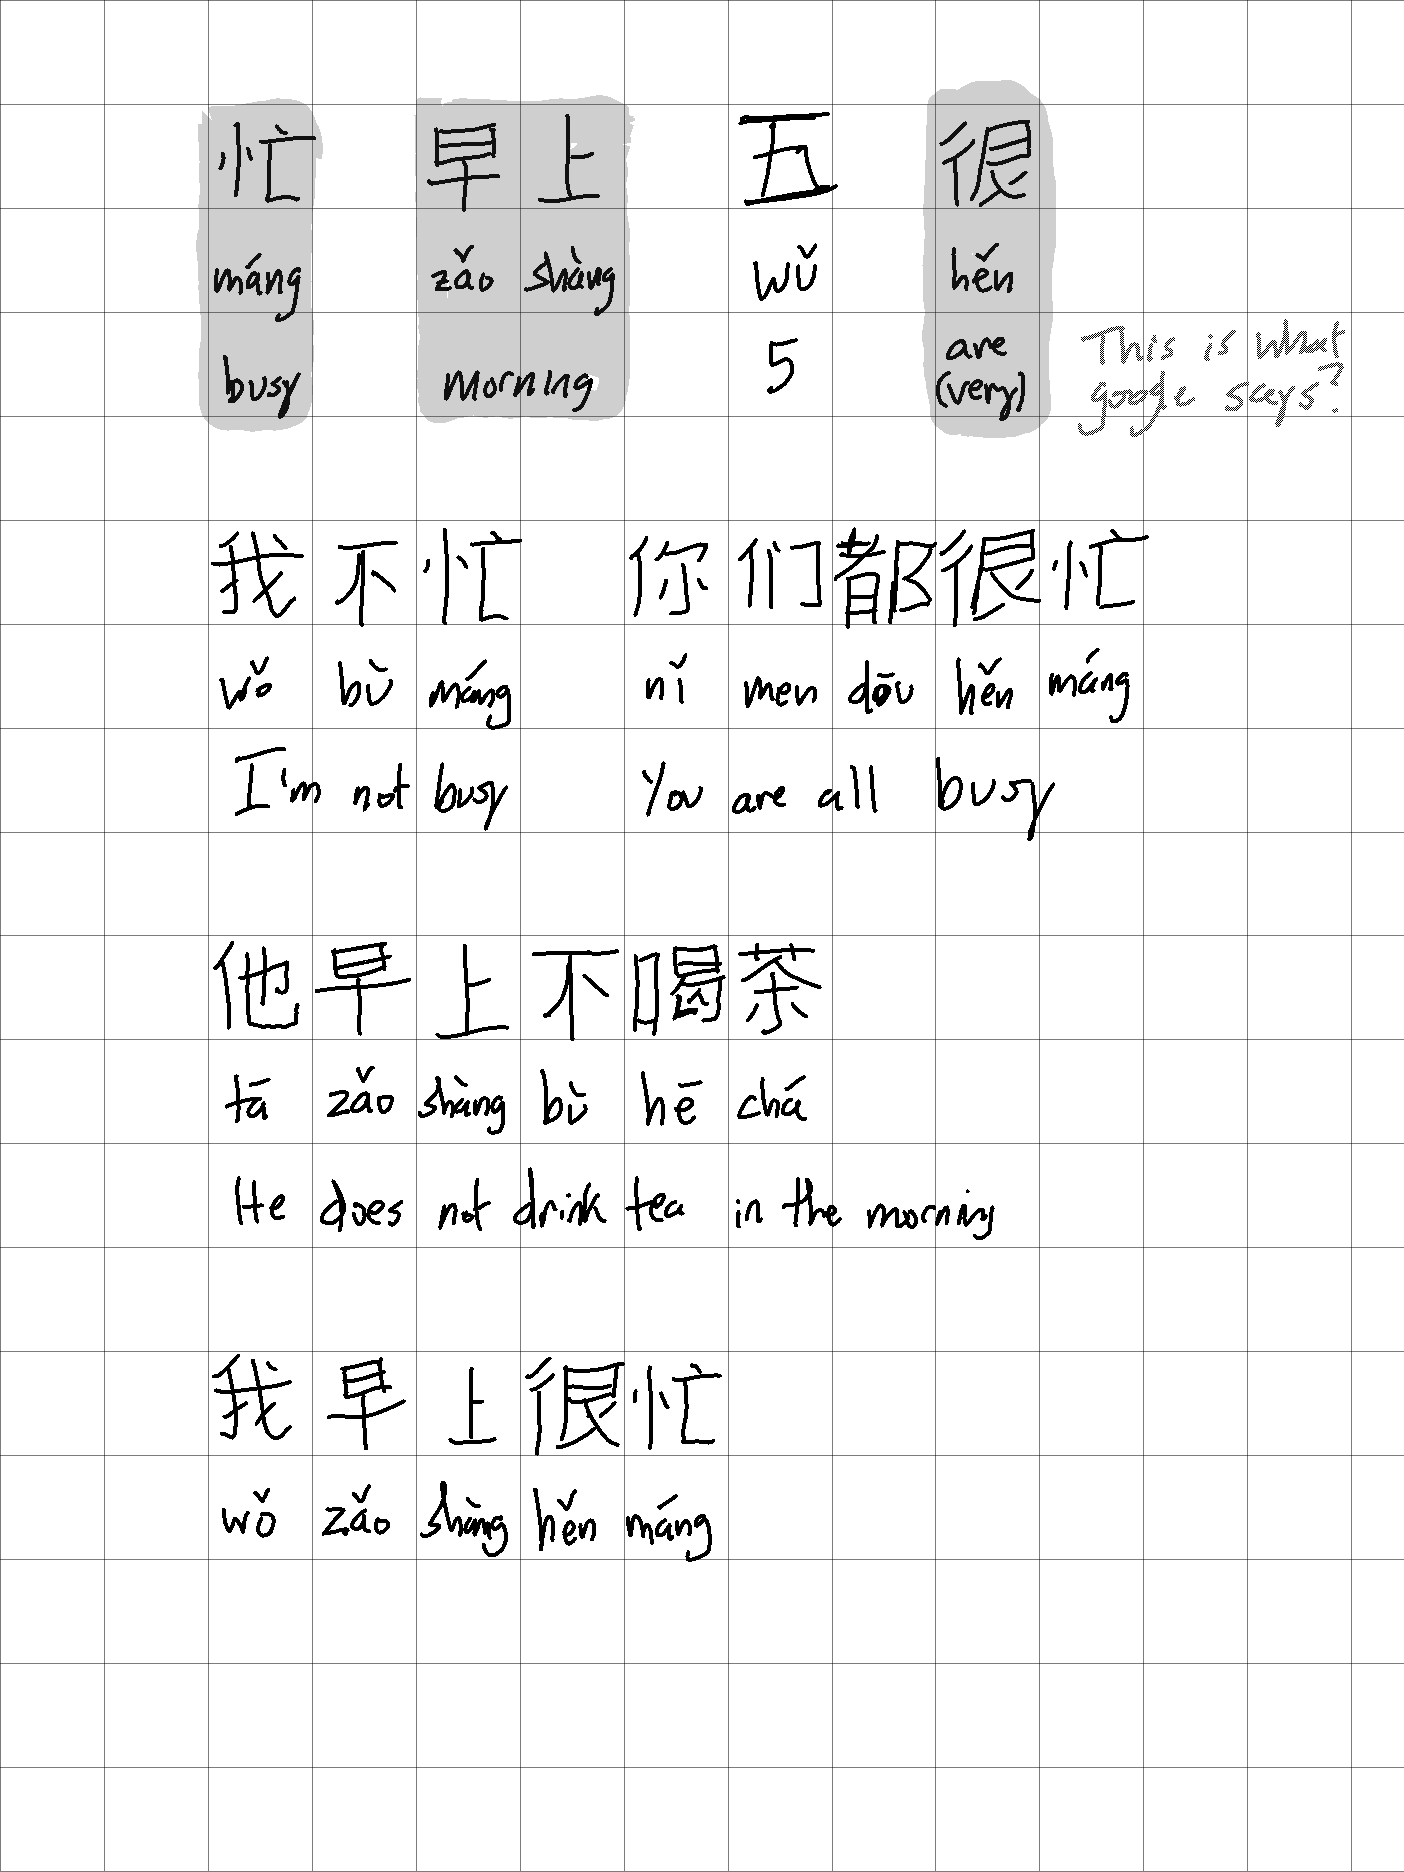 learning-mandarin-by-writing-everything-work-hard-span-easy